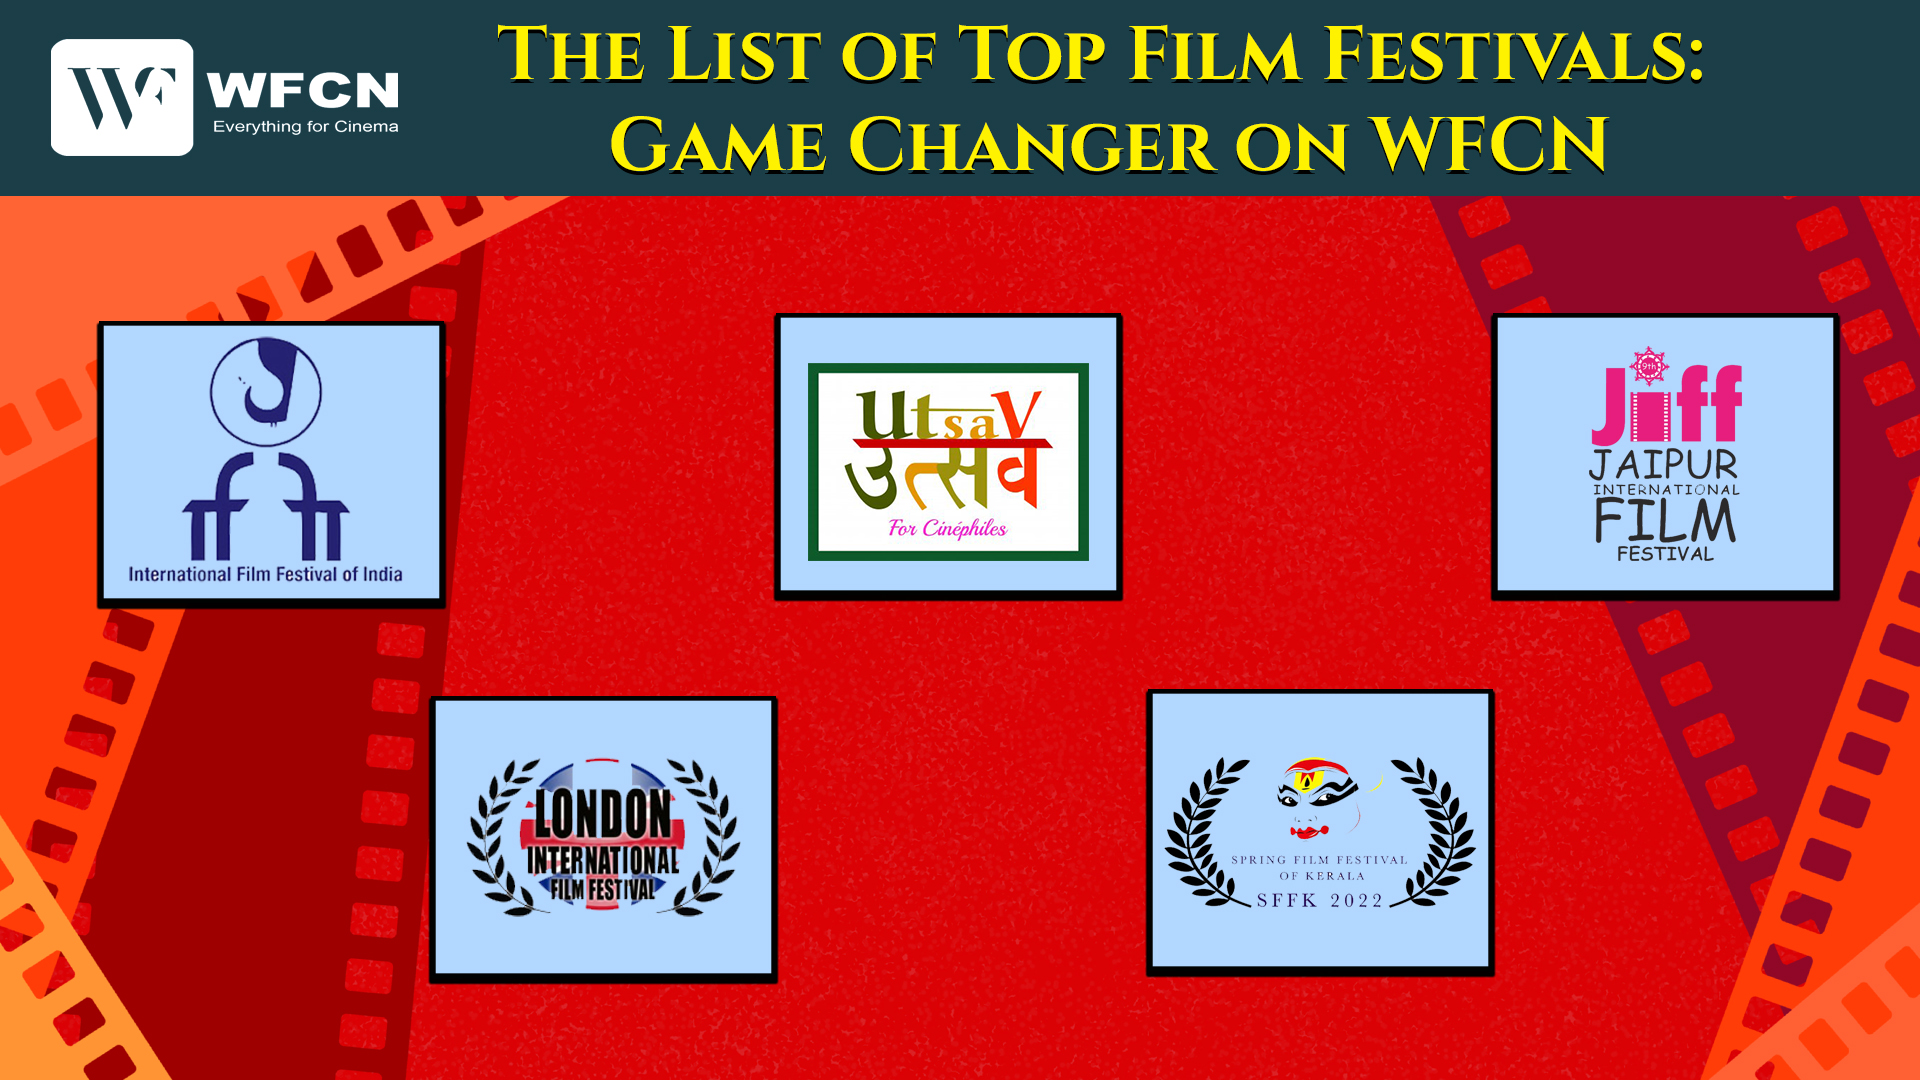 The List of Top Film Festivals: Game Changer on WFCN